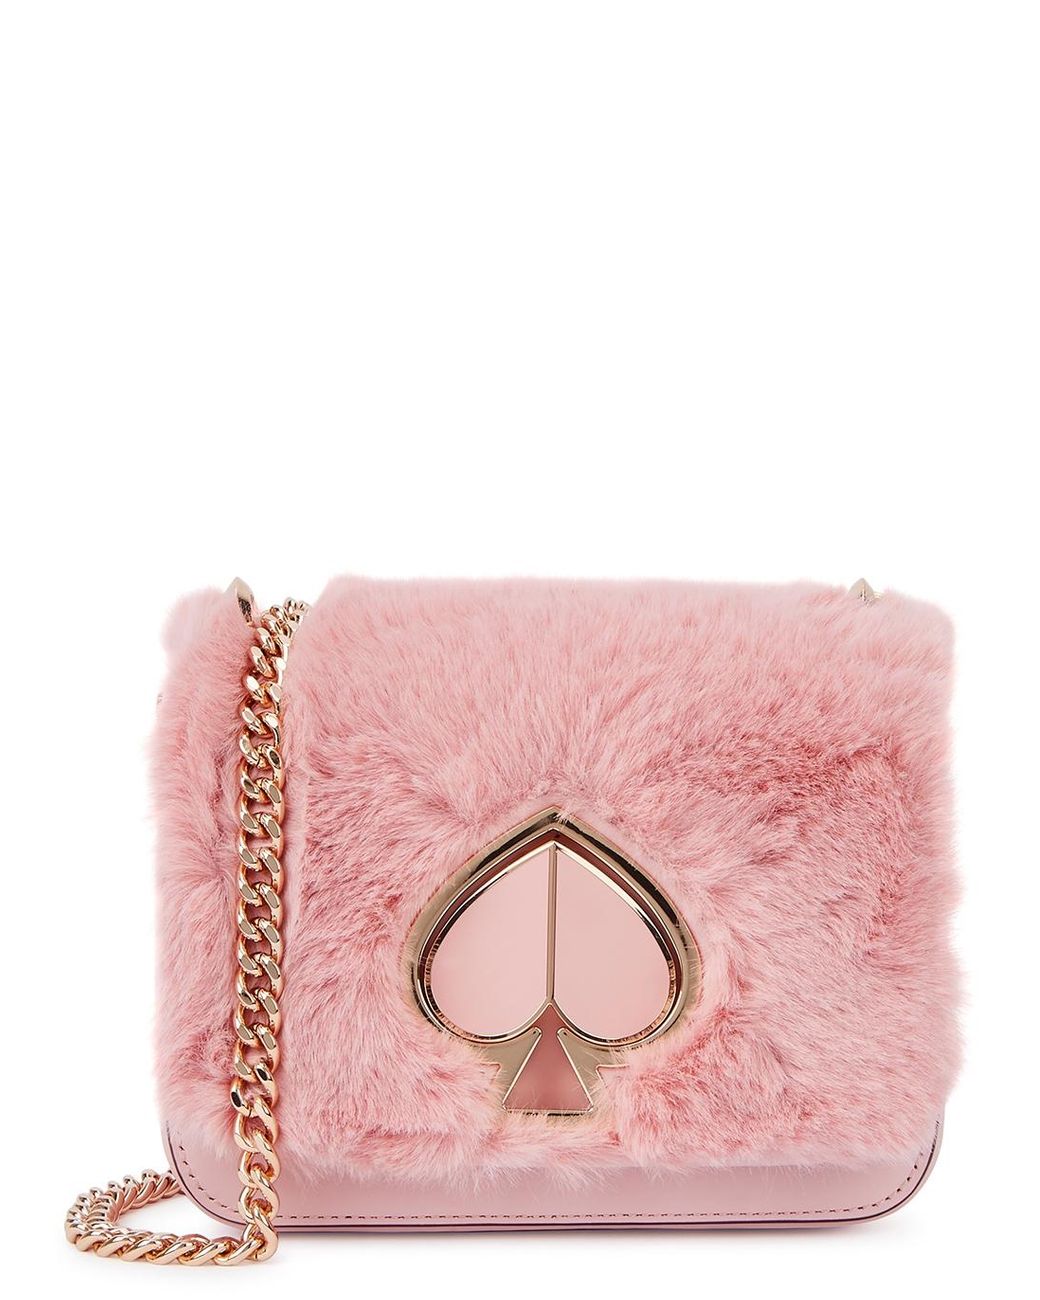 Kate Spade - Authenticated Handbag - Faux Fur Pink Plain for Women, Never Worn